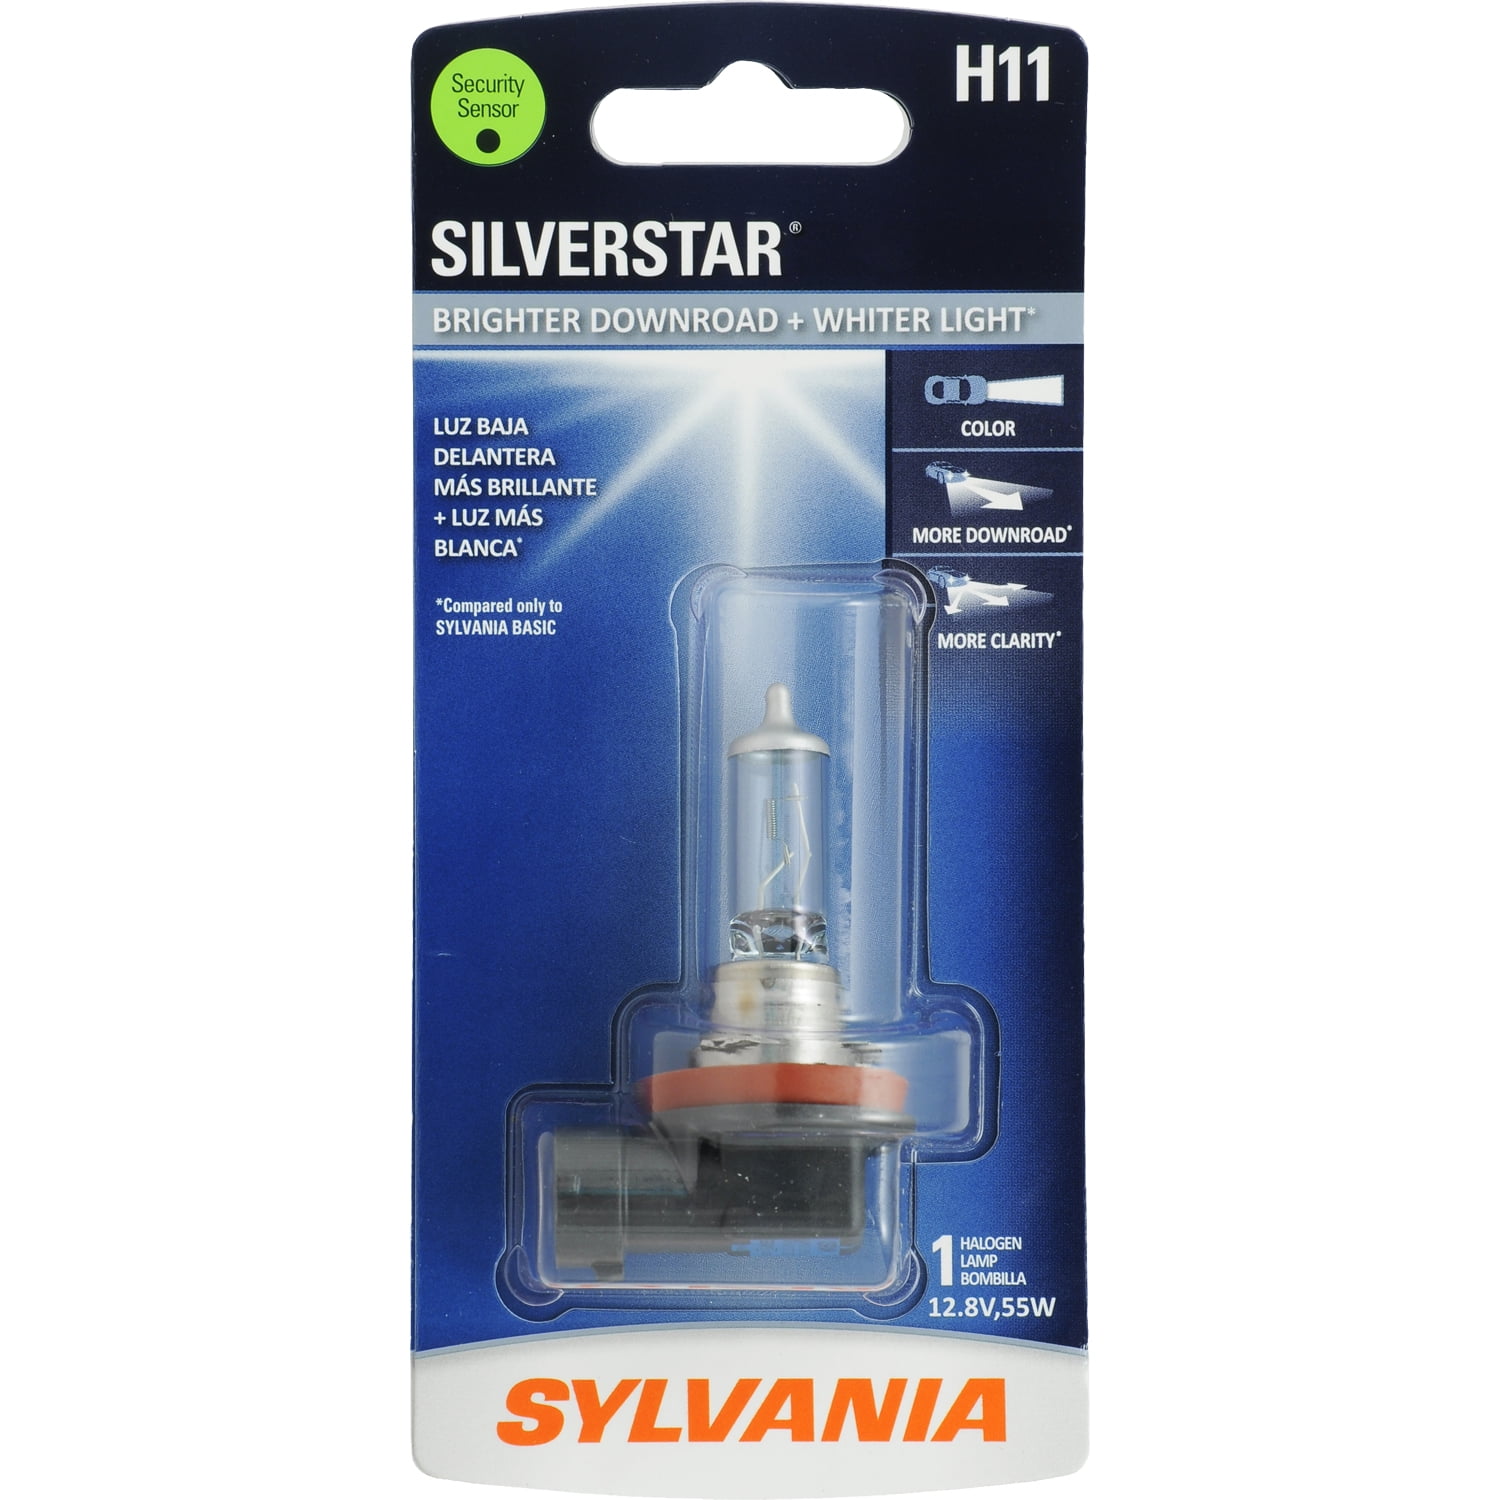 Sylvania H11 SilverStar Auto Halogen Headlight Bulb, Pack of 1.